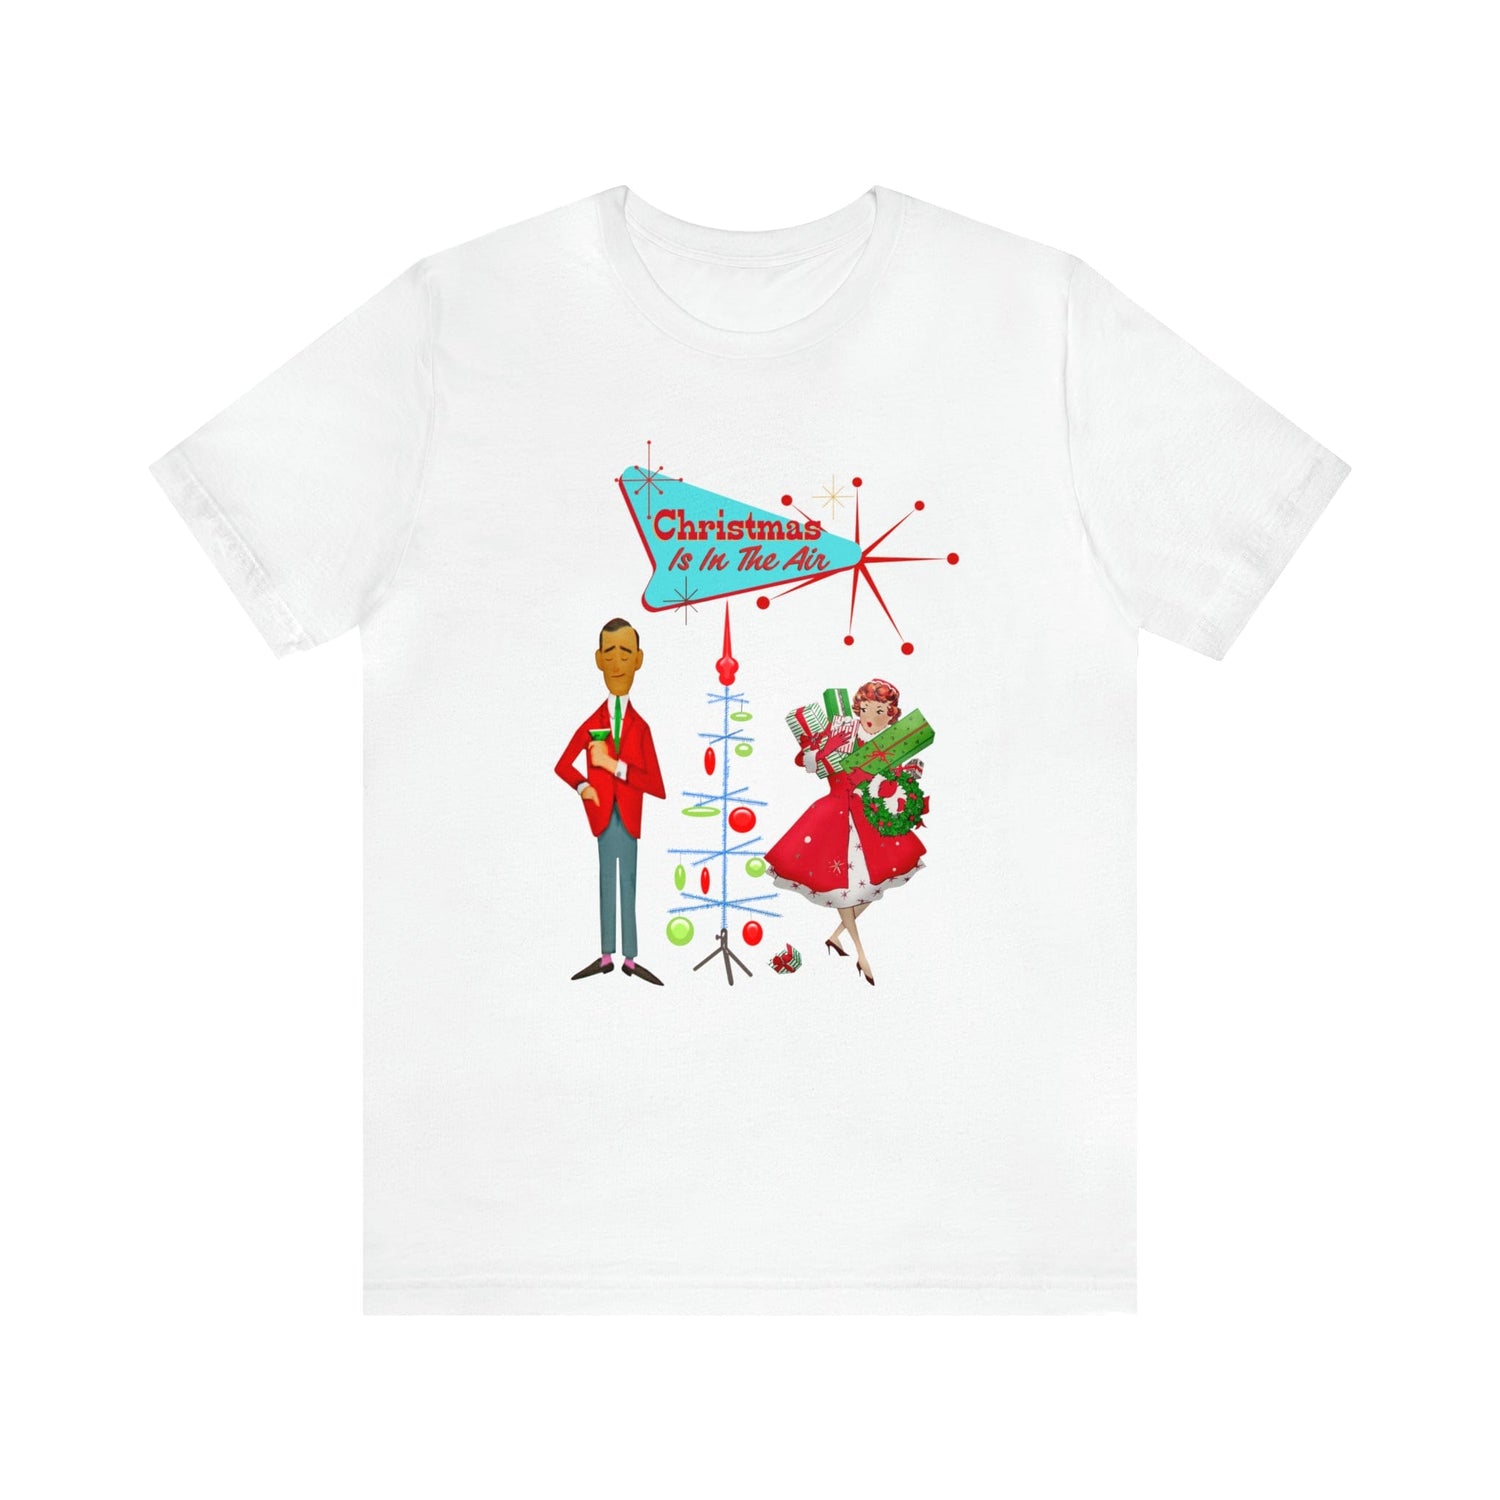 Retro Holiday, Christmas Party, Mid Century Mod, Kitschy Christmas Tee Unisex T-Shirt White / S